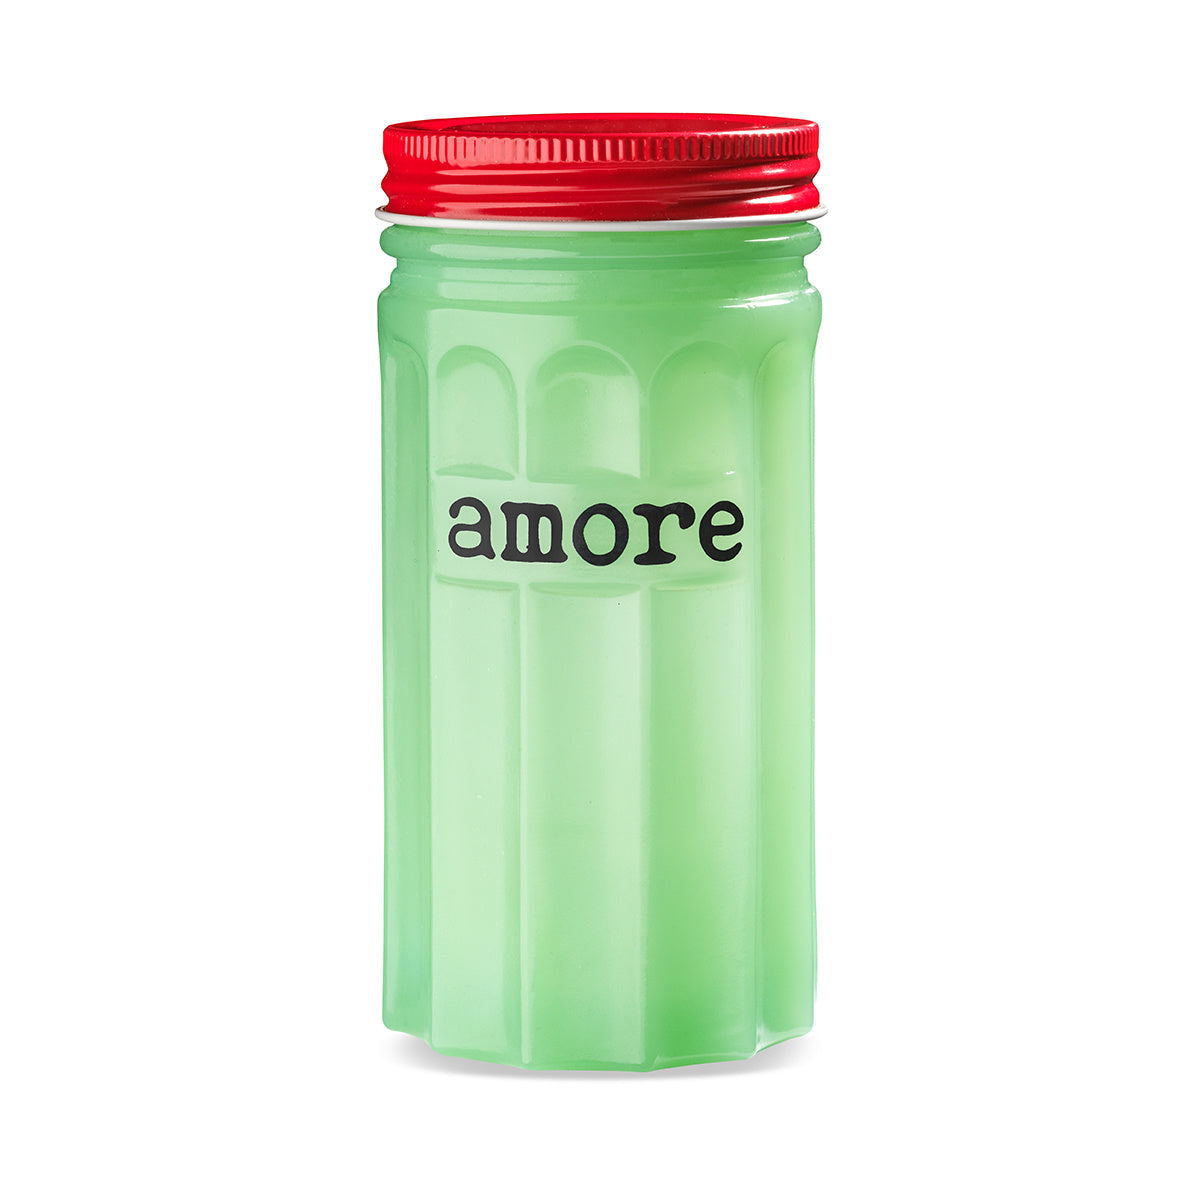 Green Opaline Jar, "Amore"